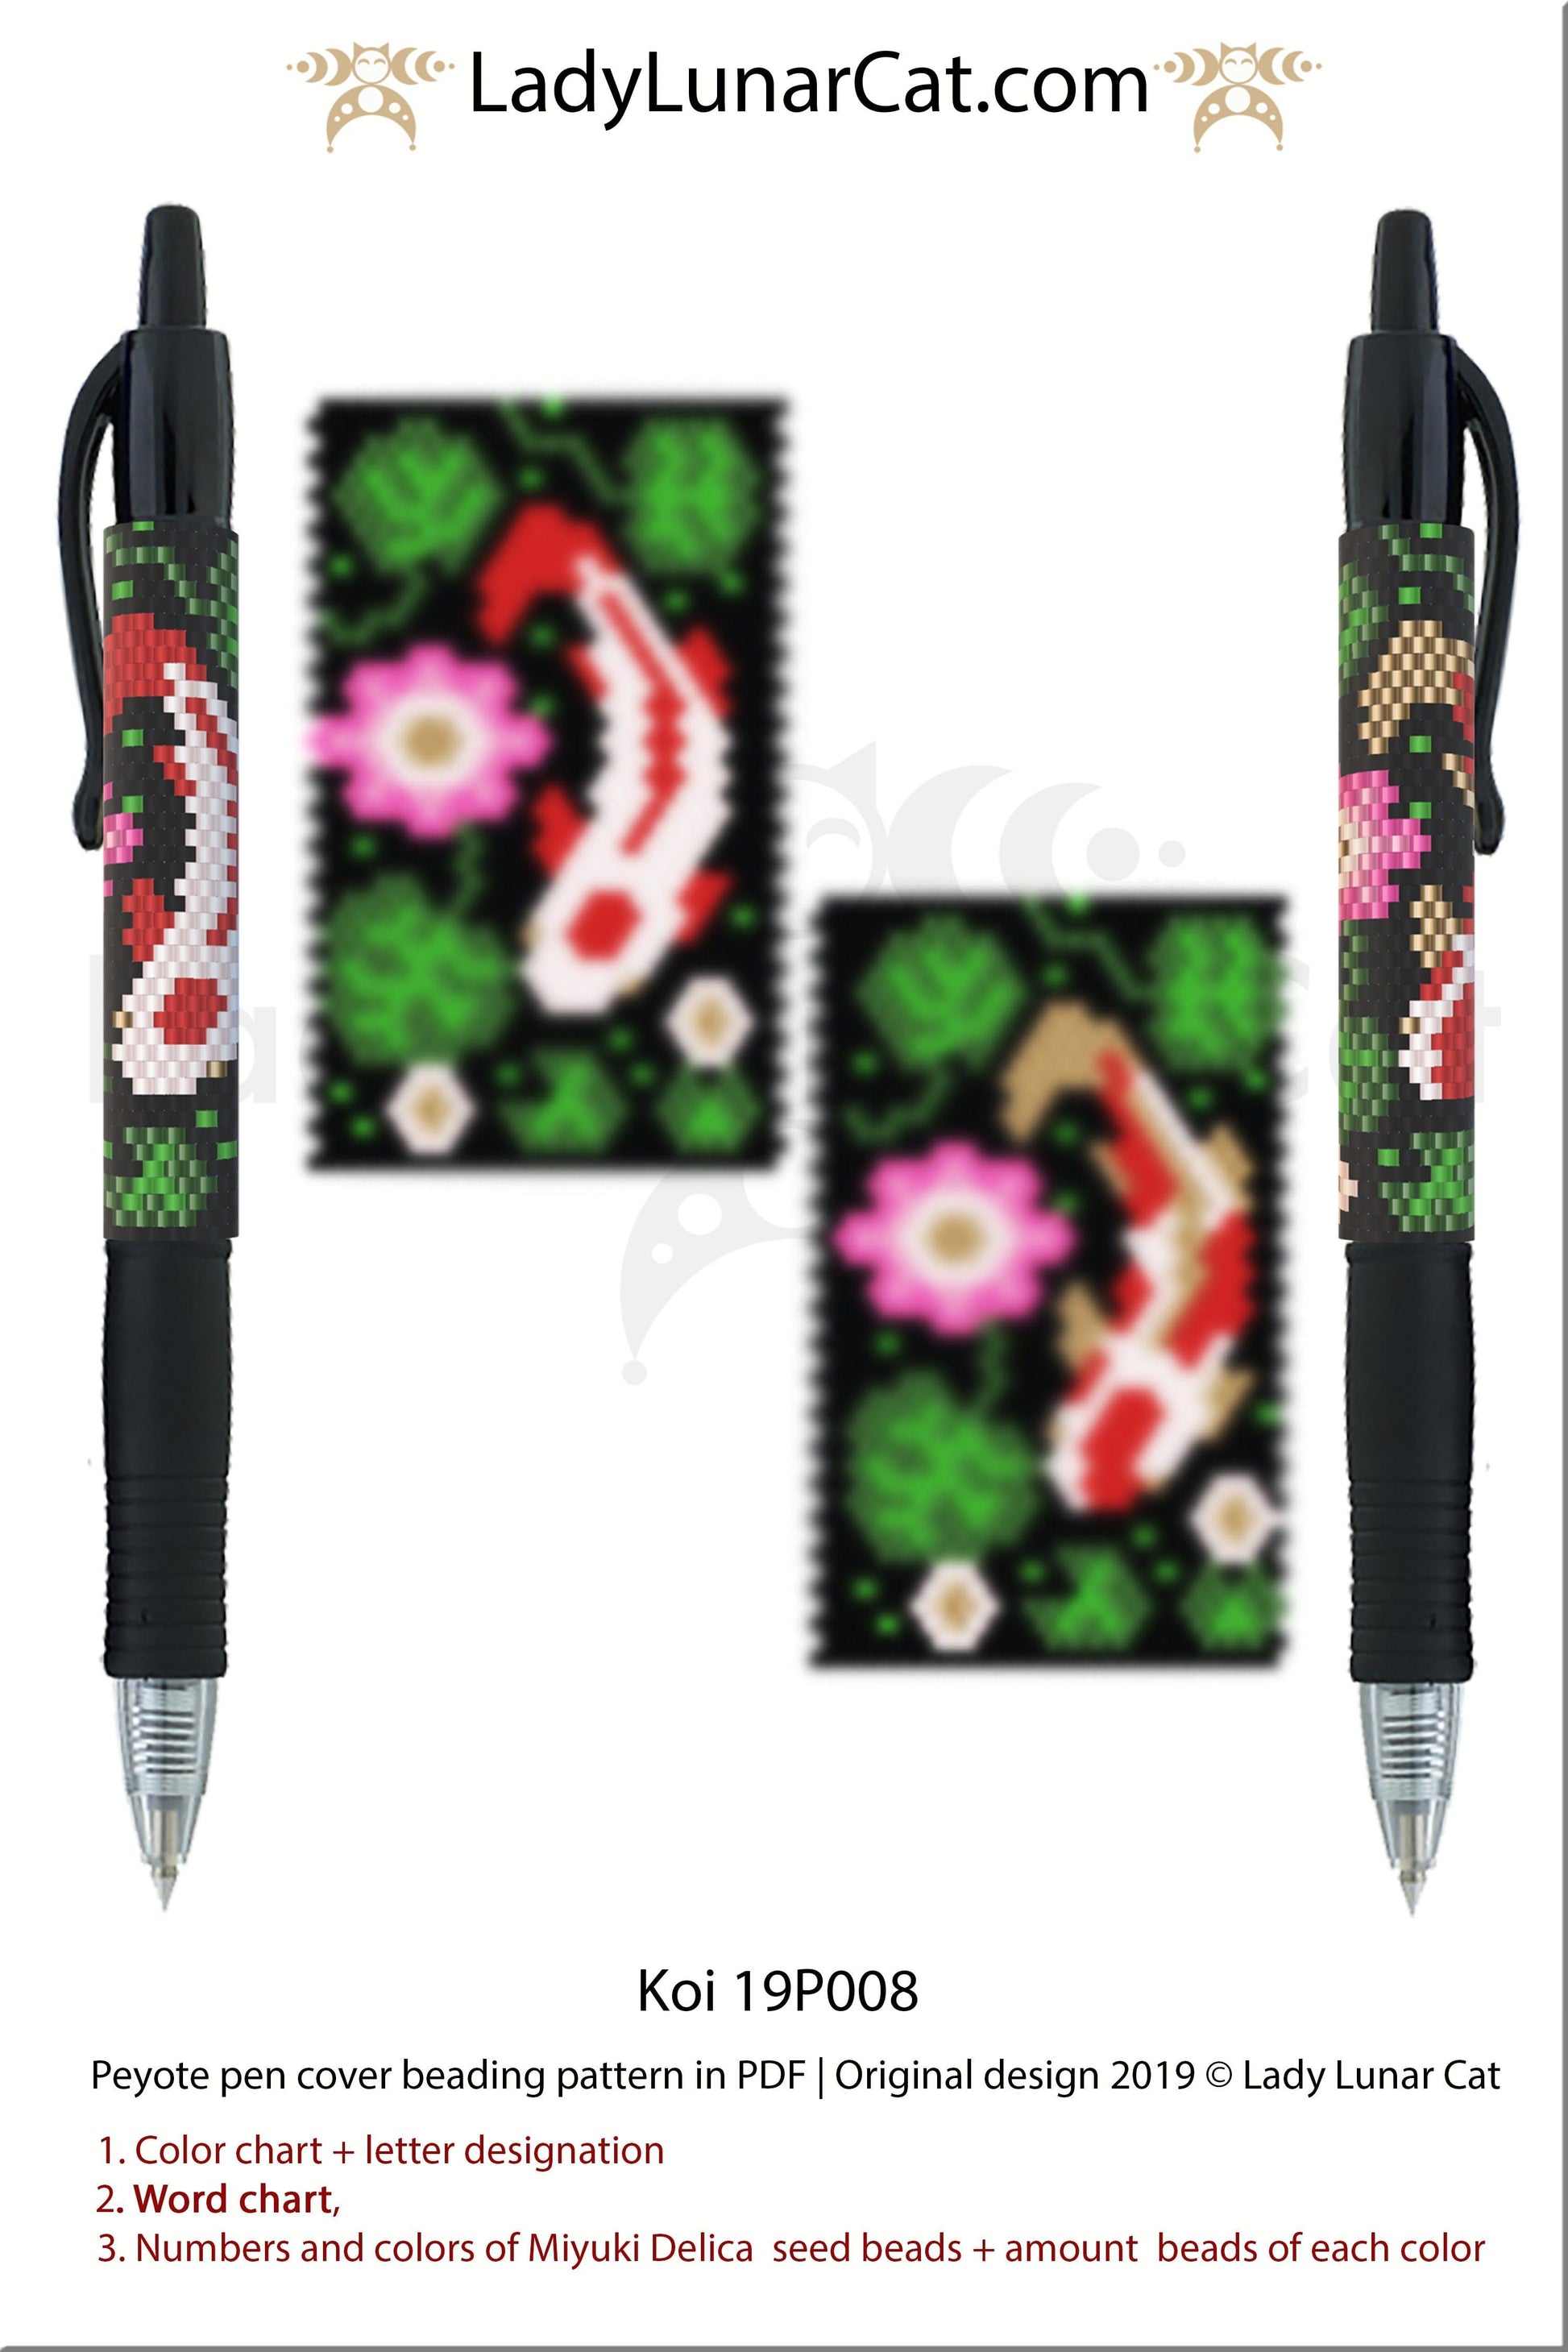 Peyote pen cover pattern for beading Koi fish 19P008 LadyLunarCat